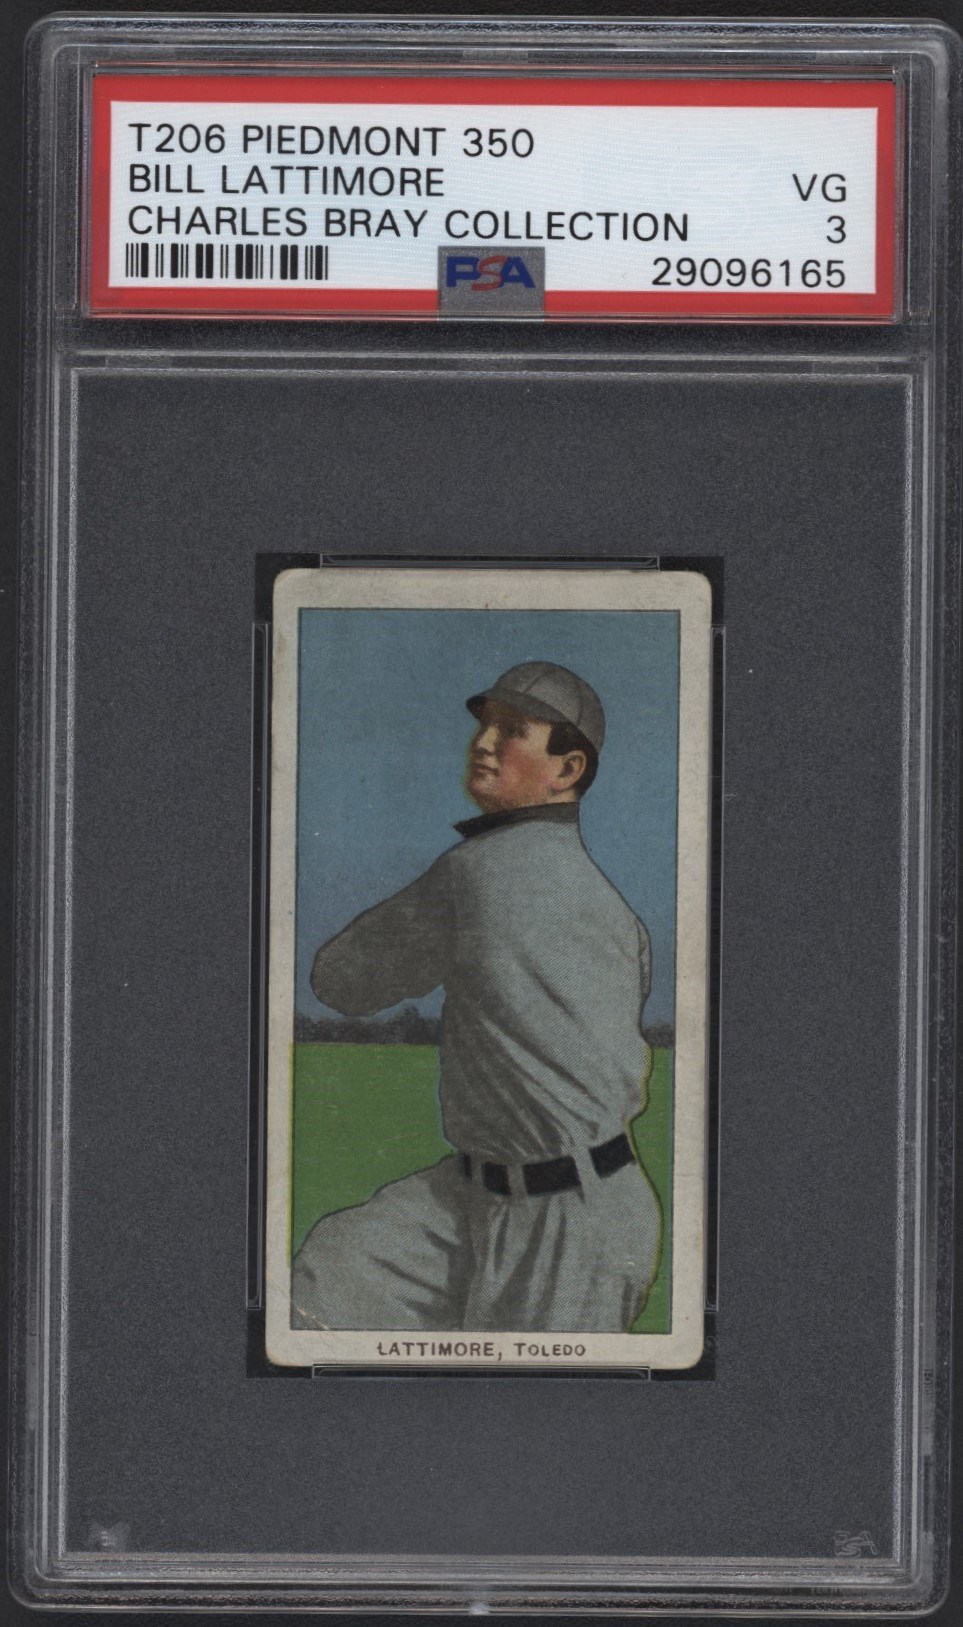 Baseball and Trading Cards - T206 Piedmont 350 Bill Lattimore PSA 3